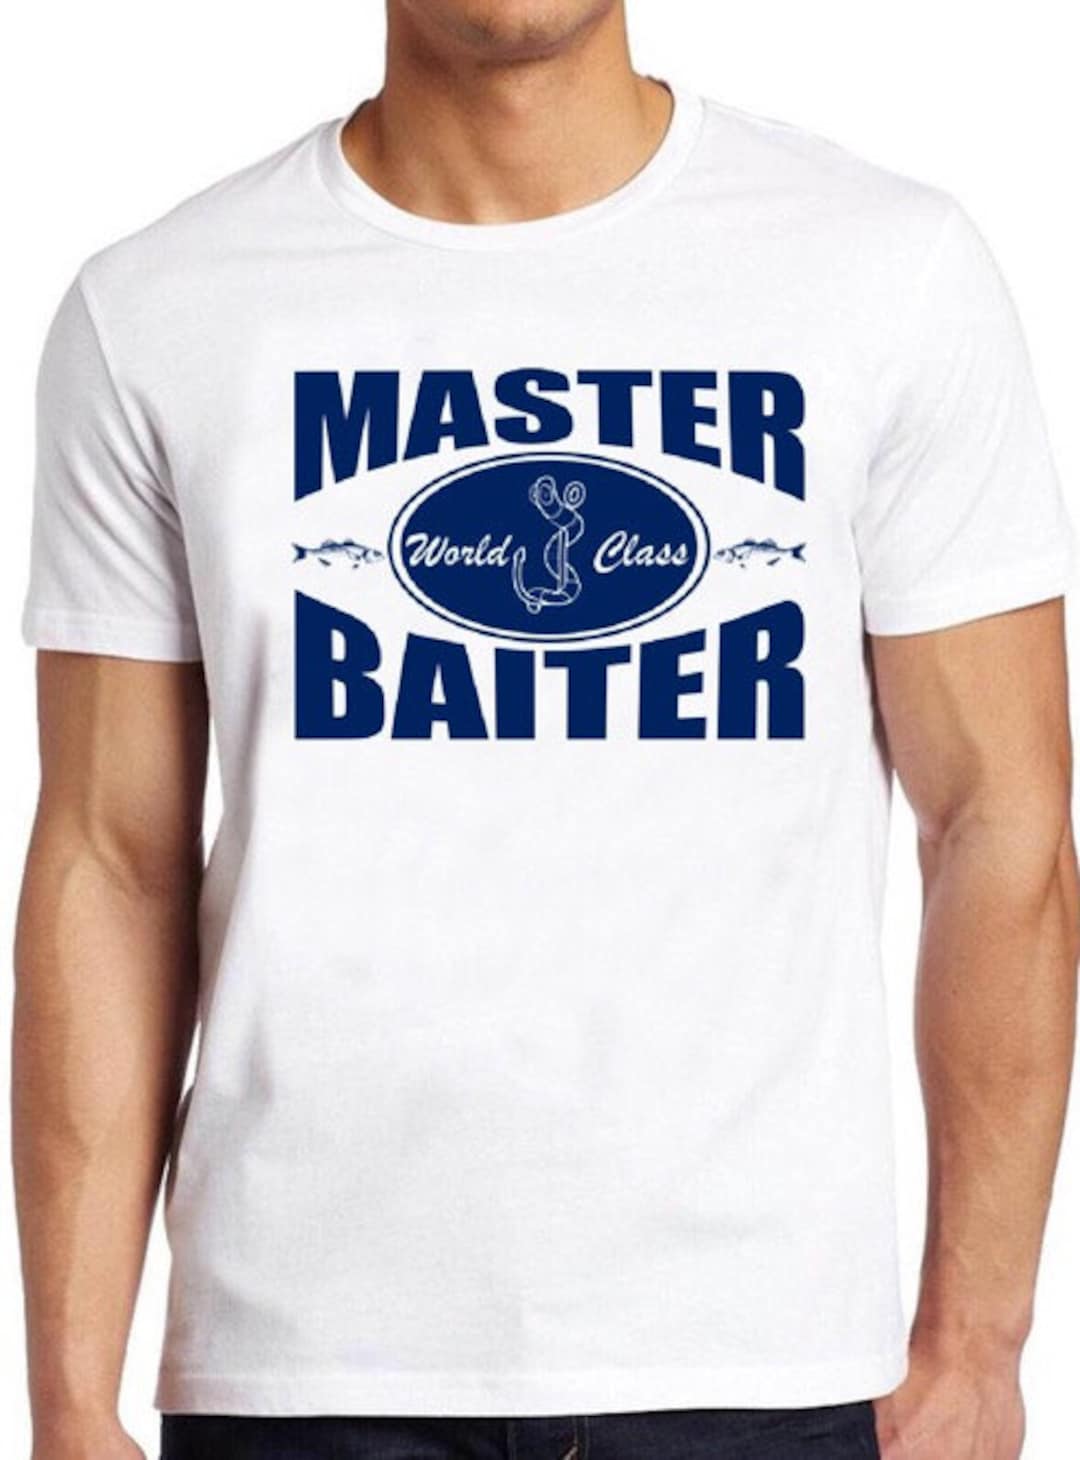 Fishing Short Sleeve T-shirt Master Baiter Hook Lure-red-XL